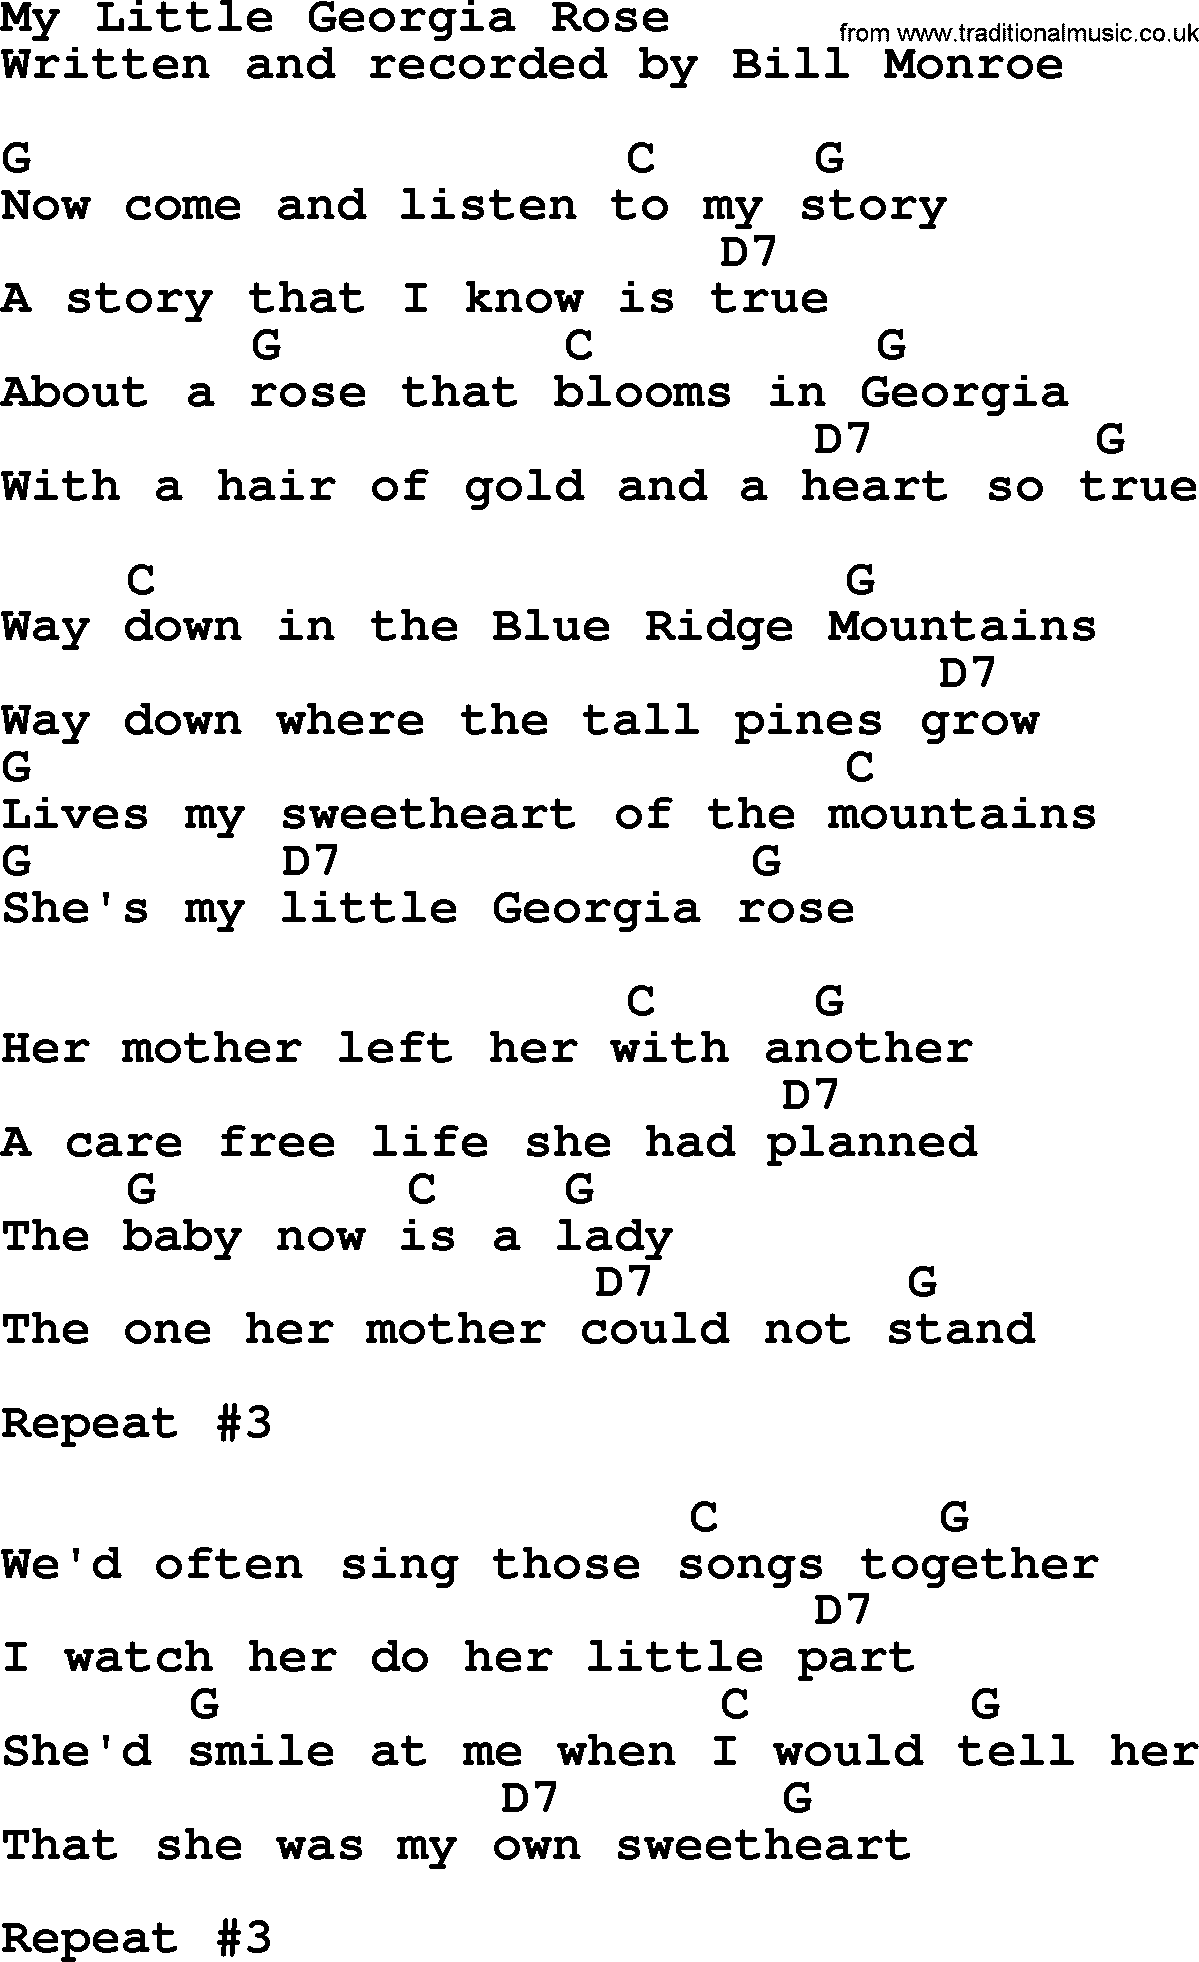 Bluegrass song: My Little Georgia Rose, lyrics and chords